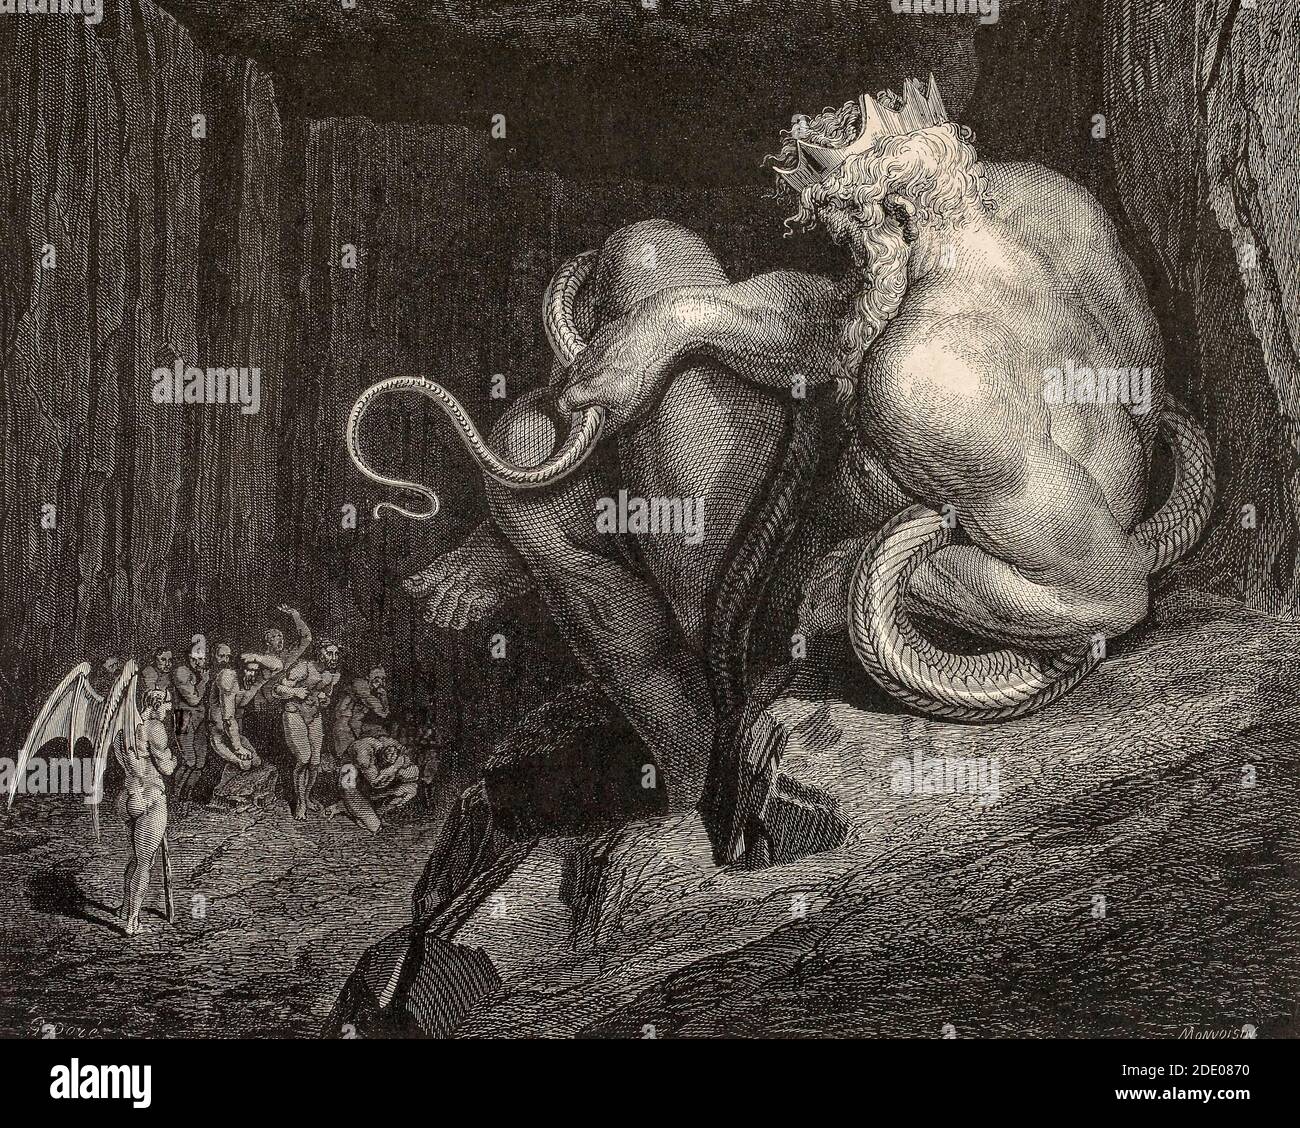 Dante Divina Commedia - Infierno - minos juez canto infernal V - ilustración de Gustave Dorè Foto de stock